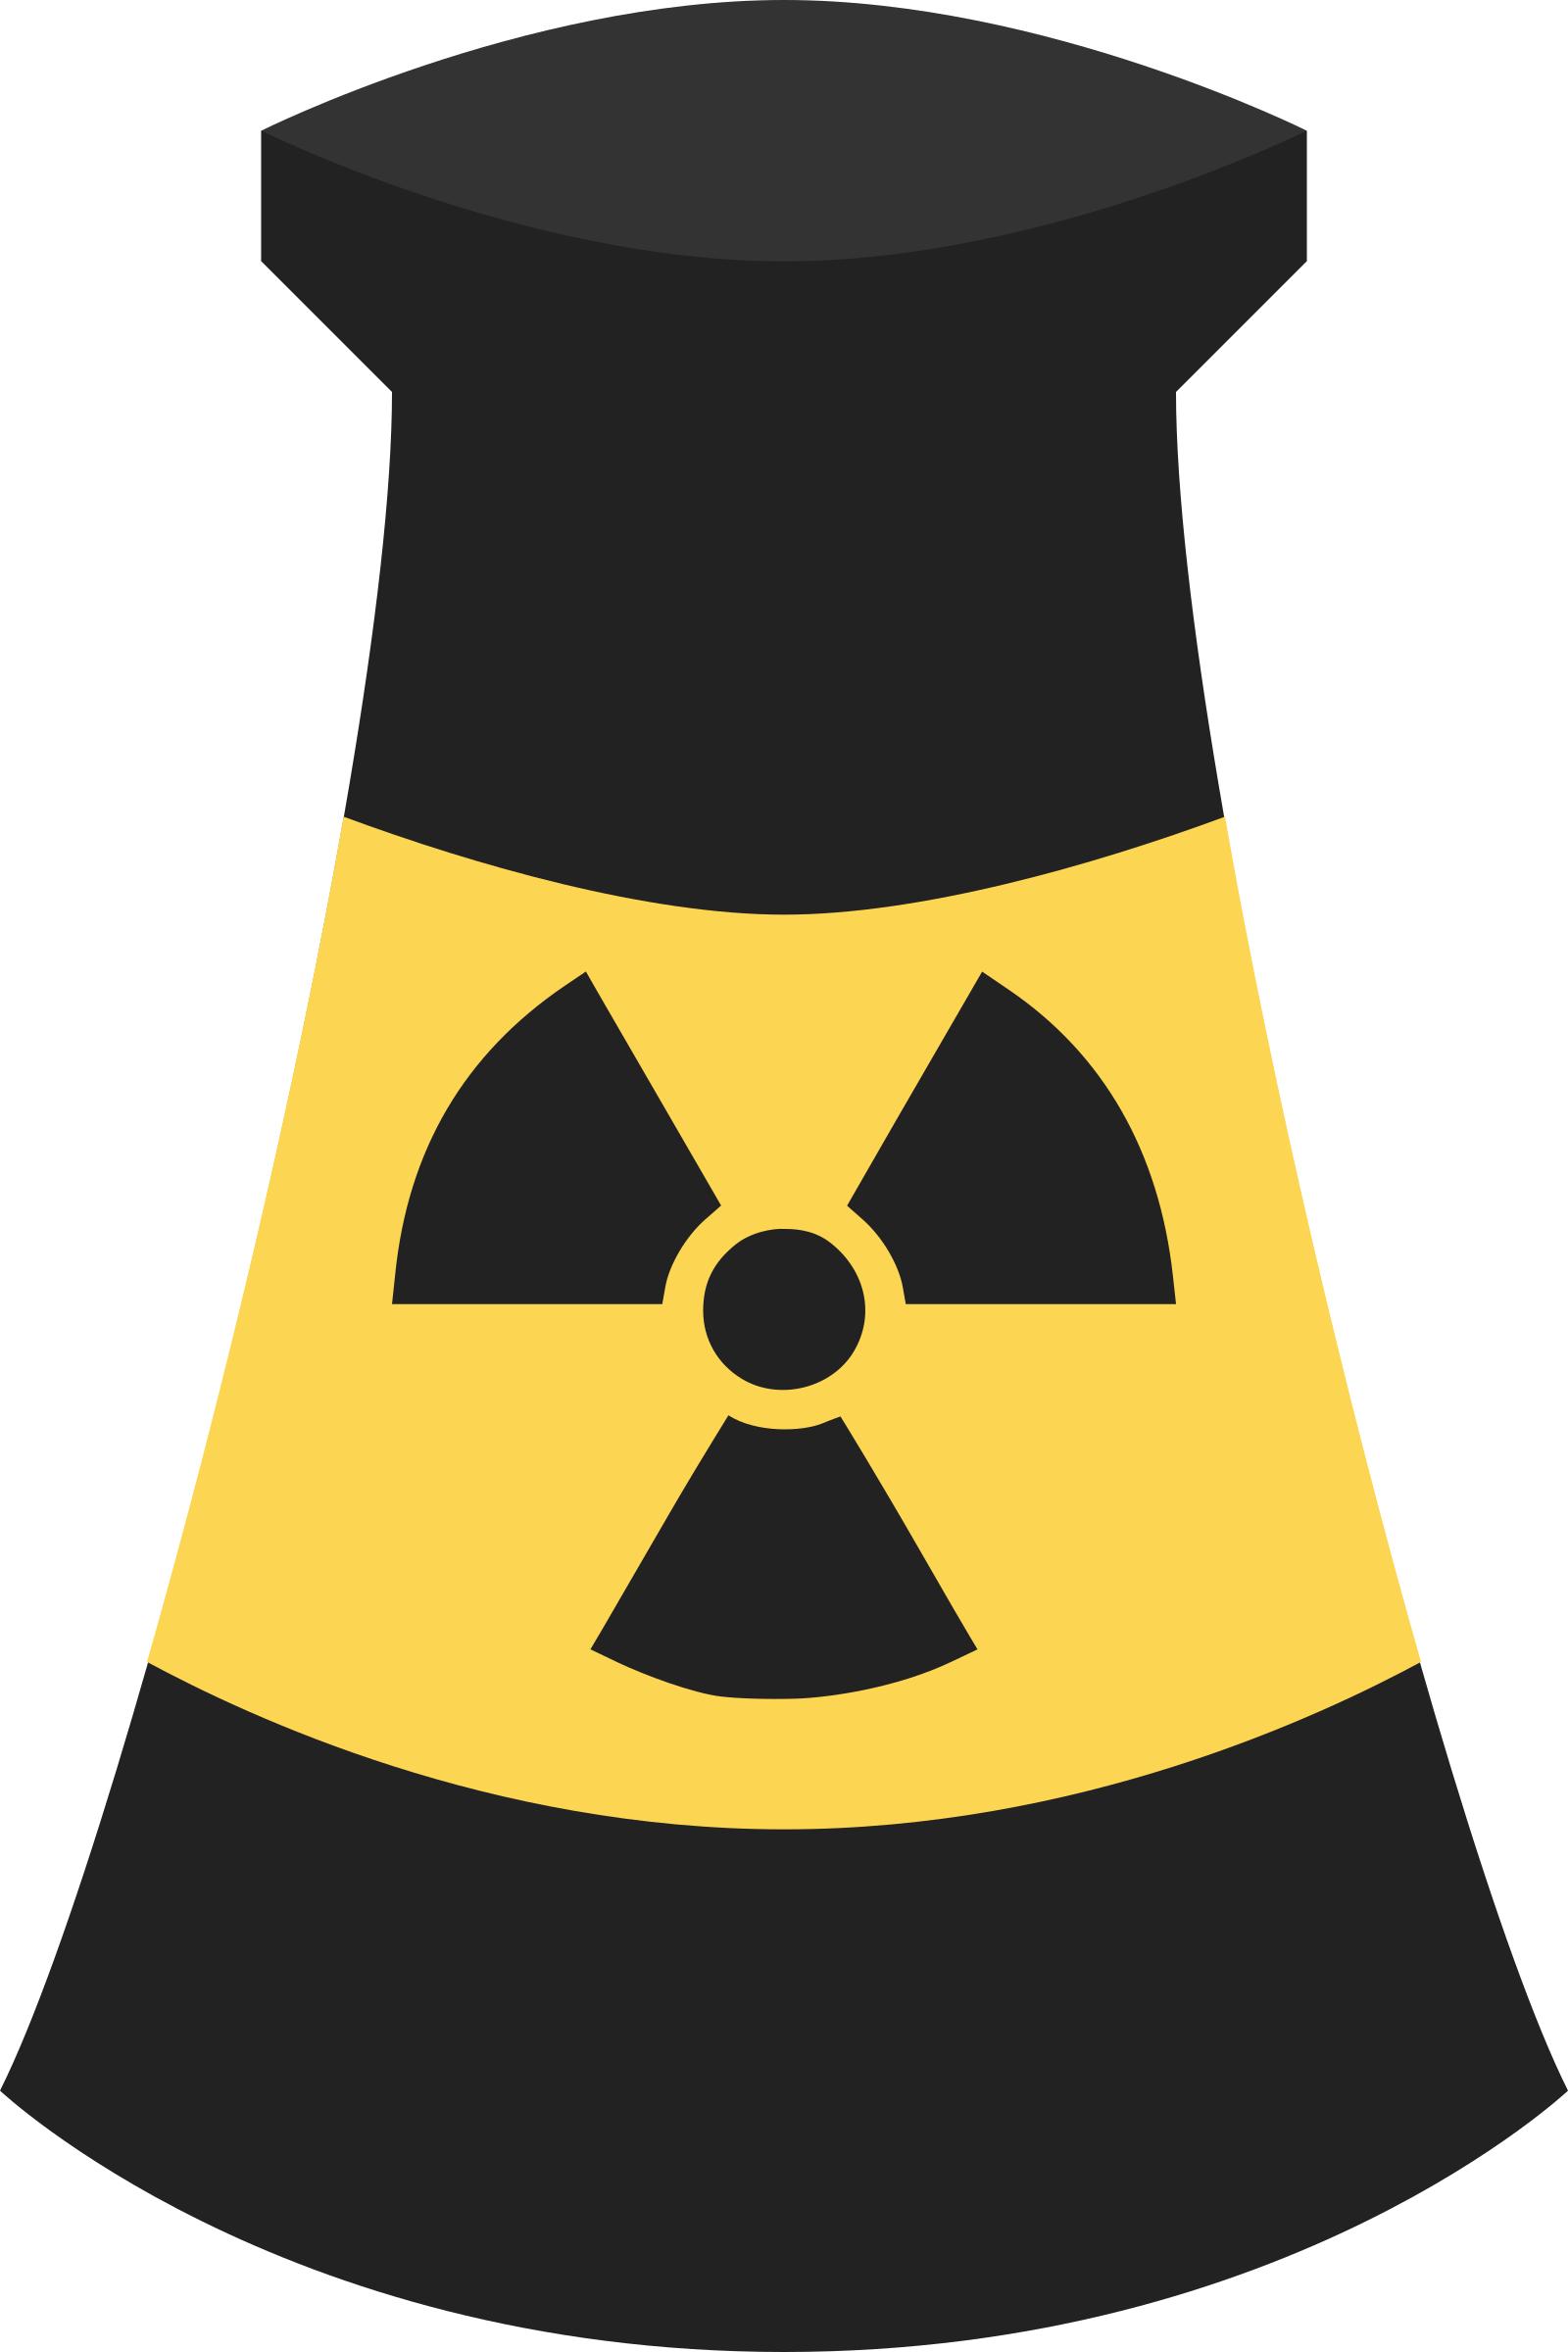 Atomic Energy Plant Symbol 4 png